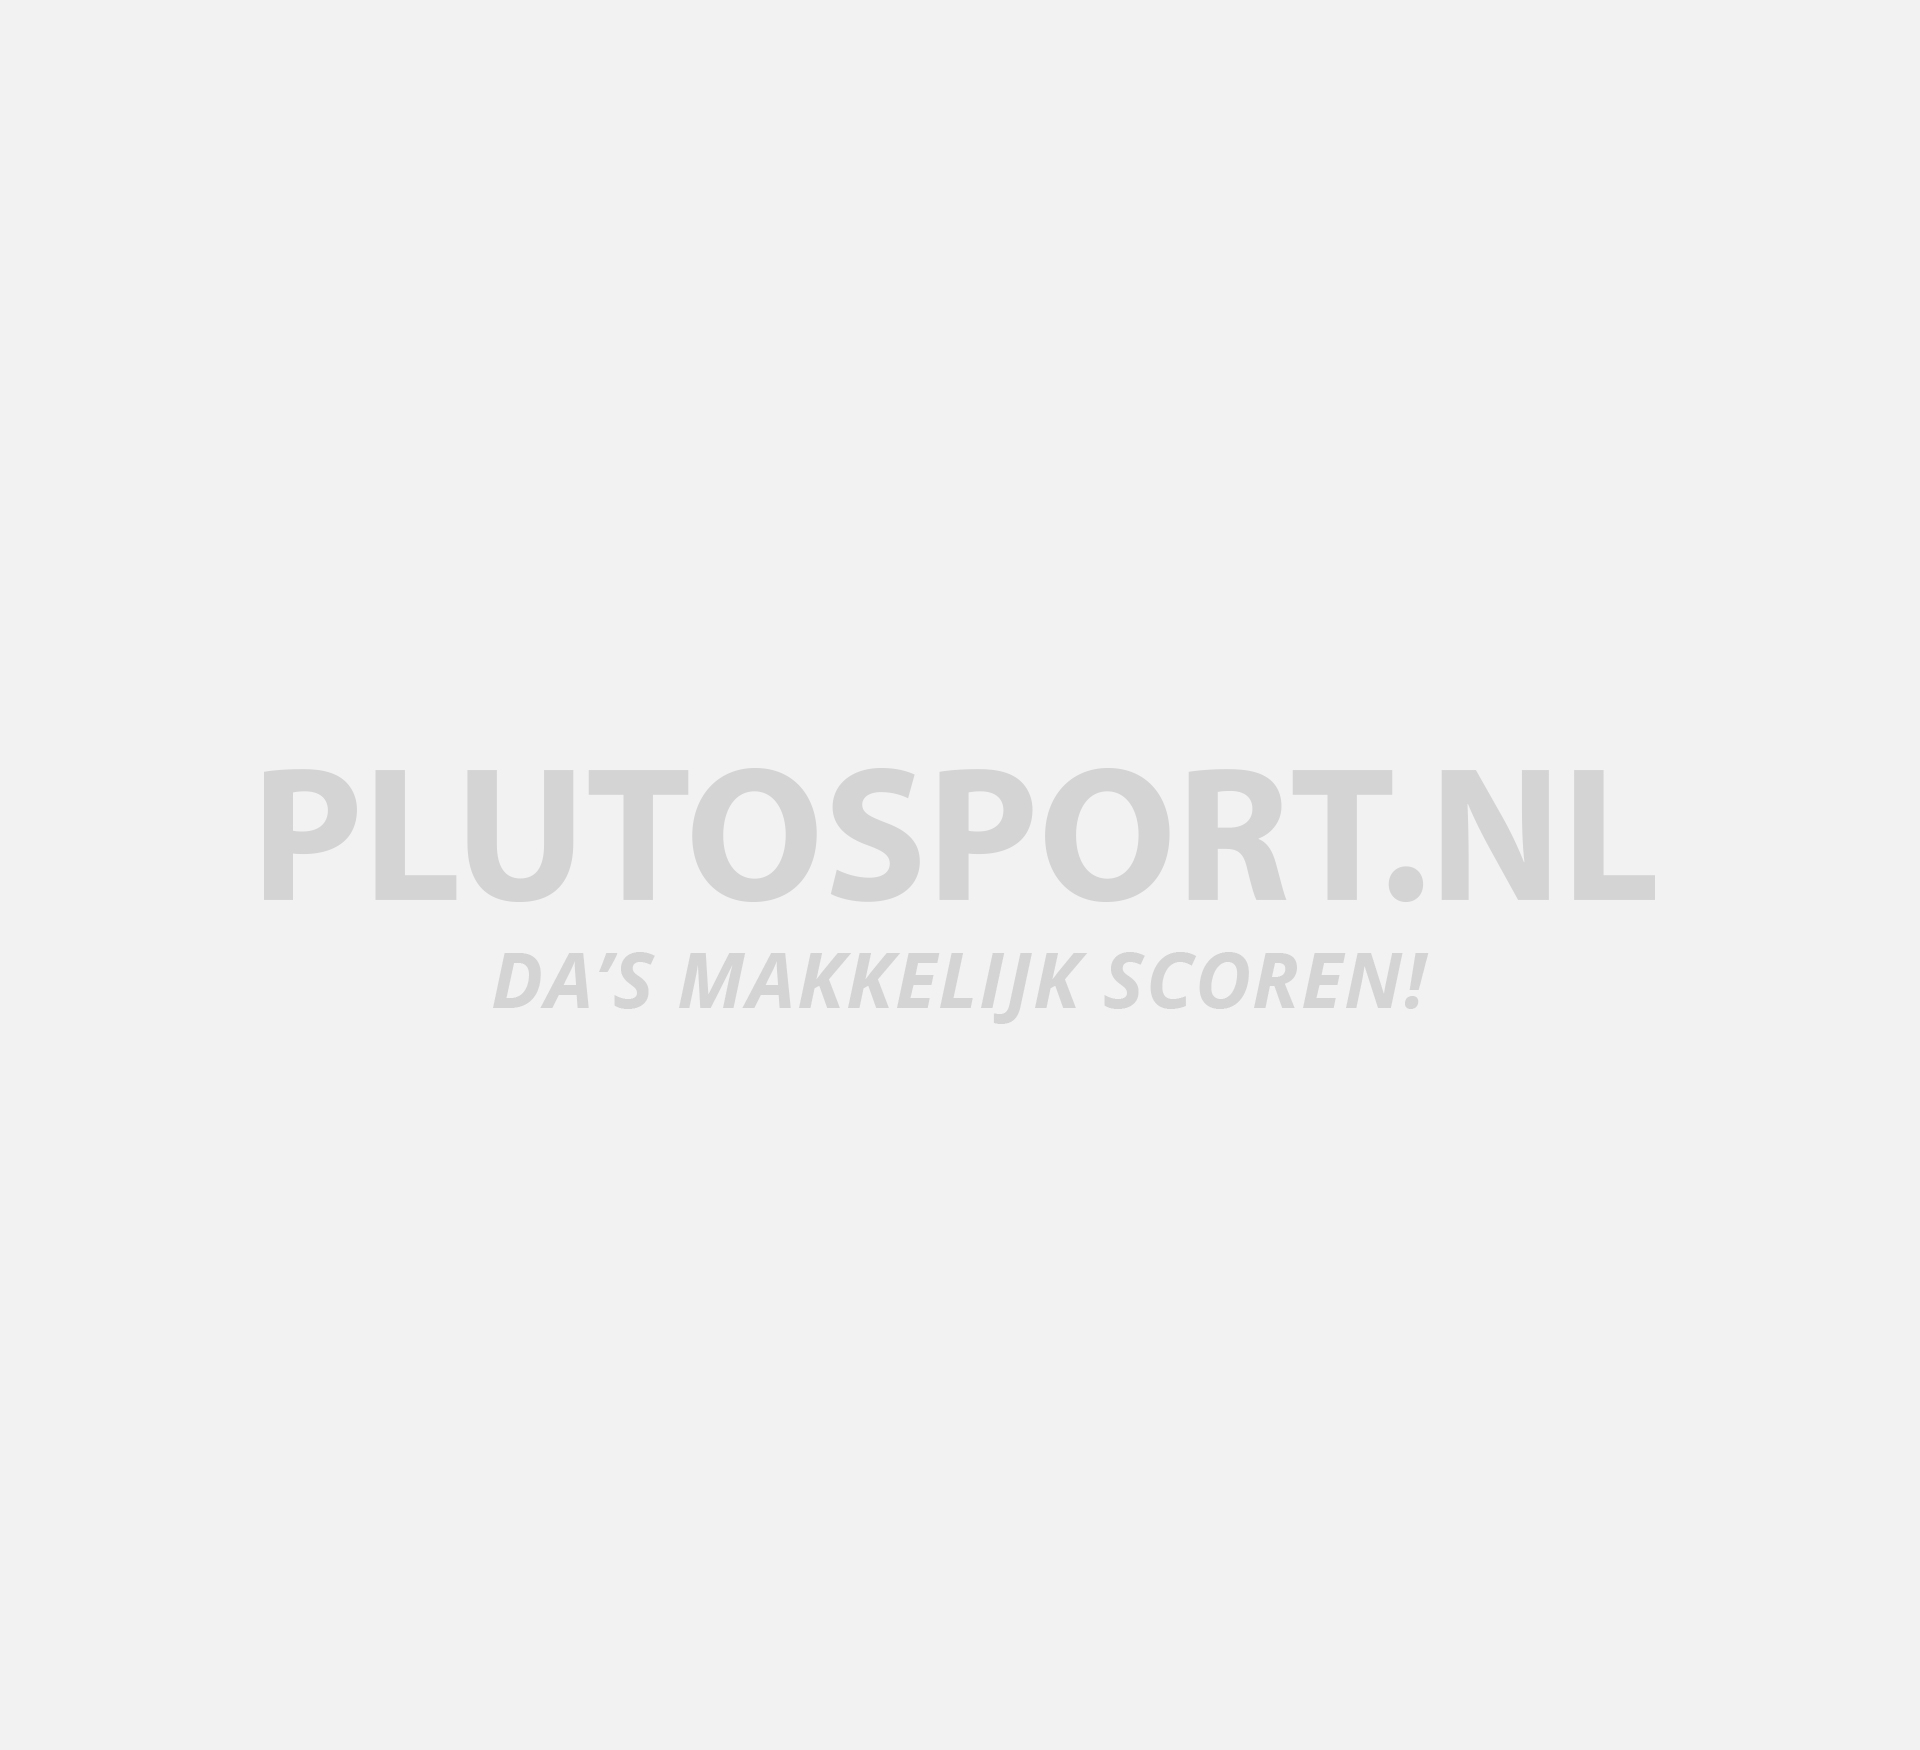 Adidas-Tiro-23-League-Joggingbroek-Junior-2309221218